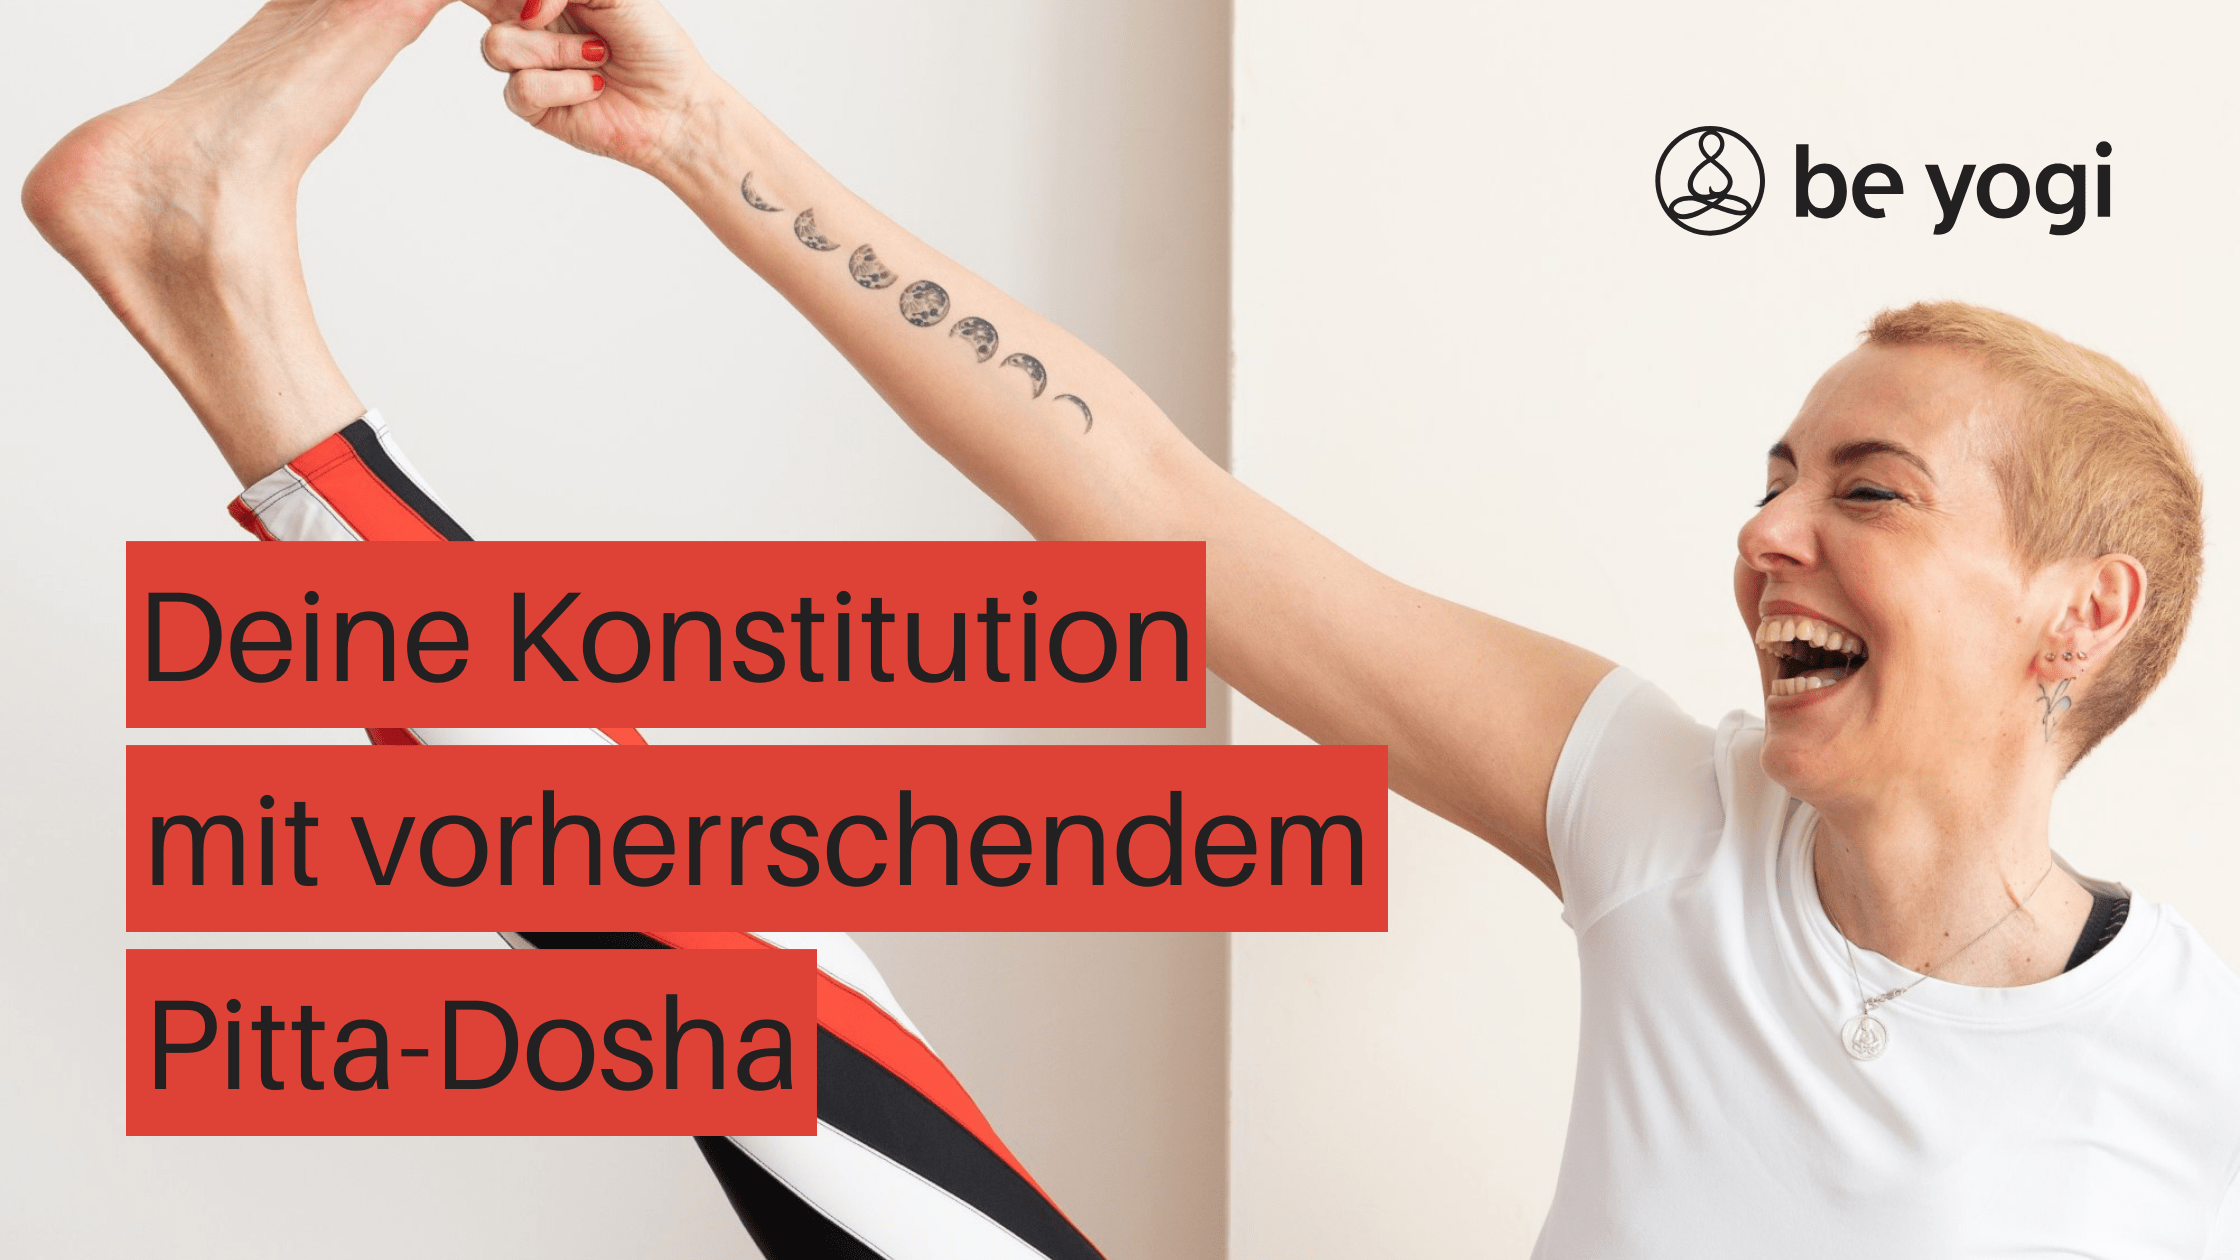 Deine-Konstitution-mit-vorherrschendem-Pitta-Dosha-Be-Yogi-Artikel-Ayurveda-Yoga